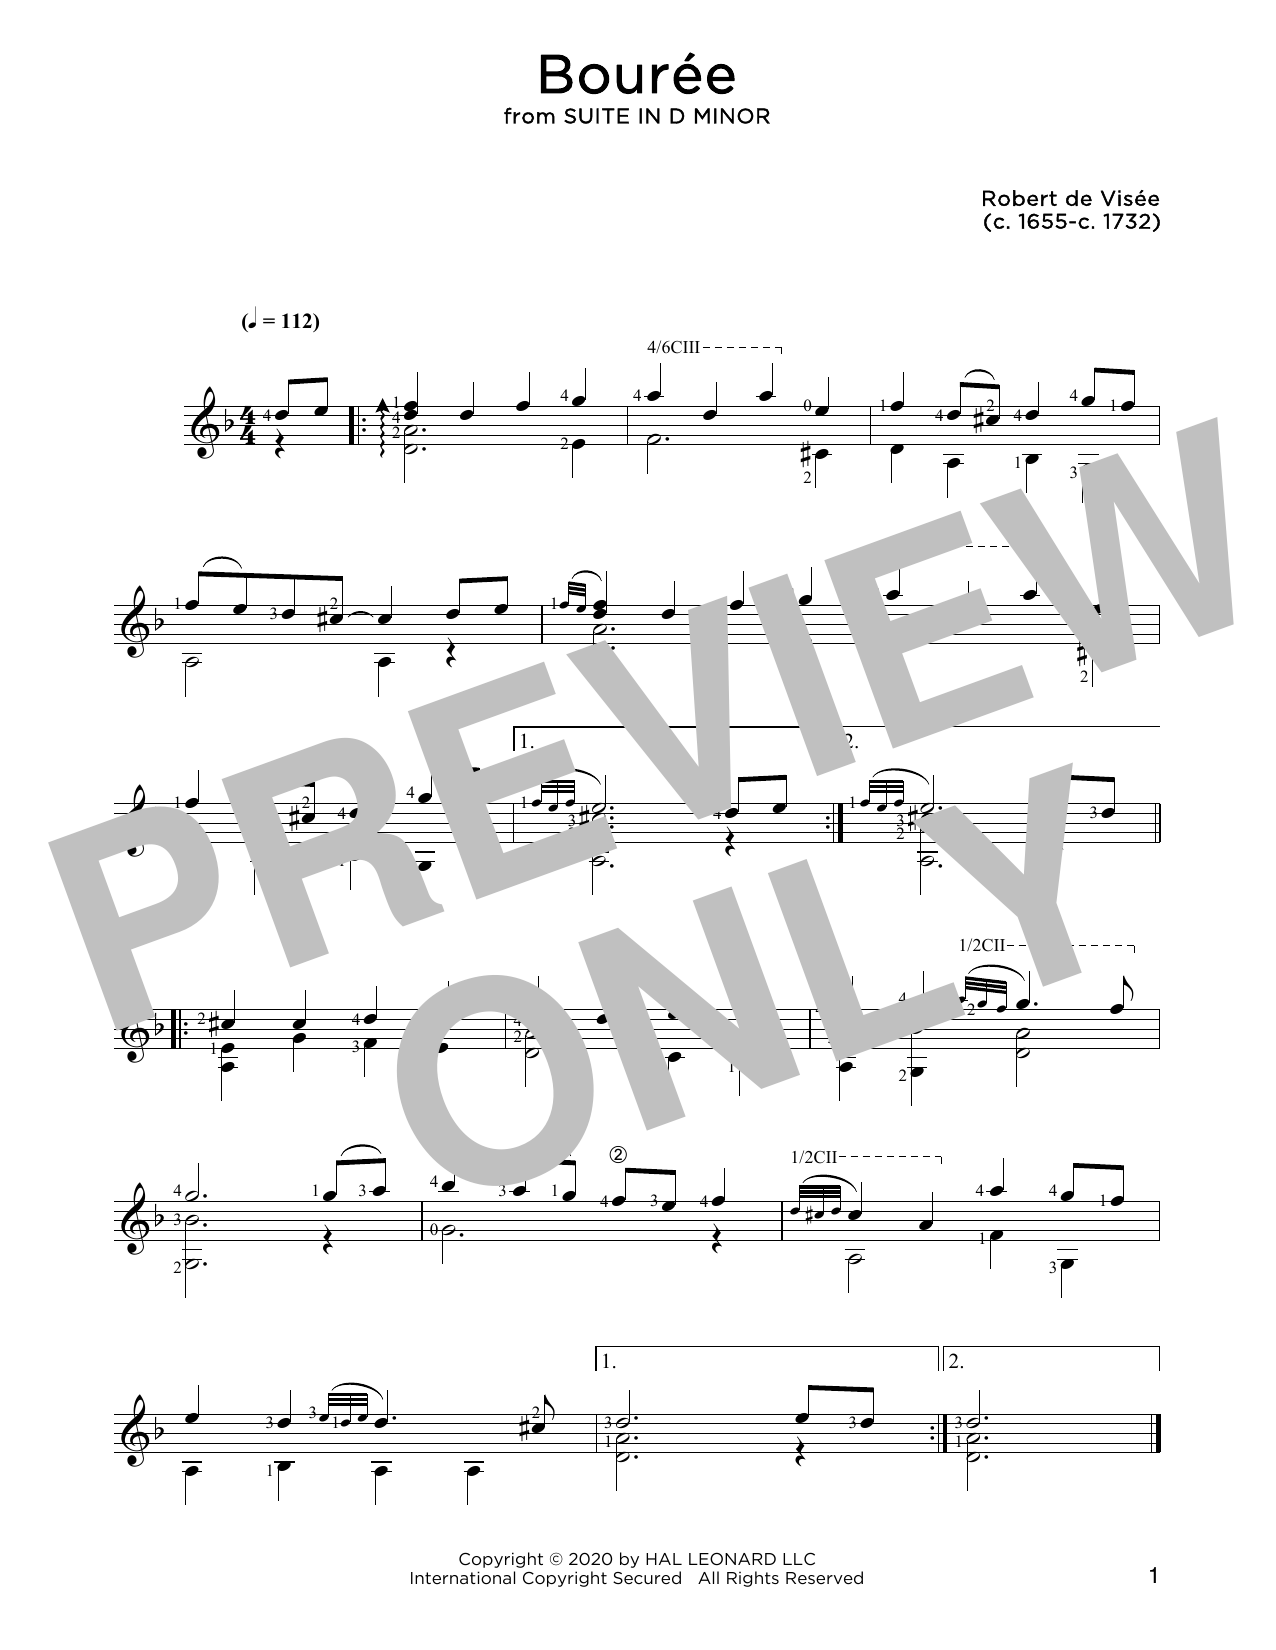 Robert de Visee Bouree Sheet Music Notes & Chords for Solo Guitar - Download or Print PDF